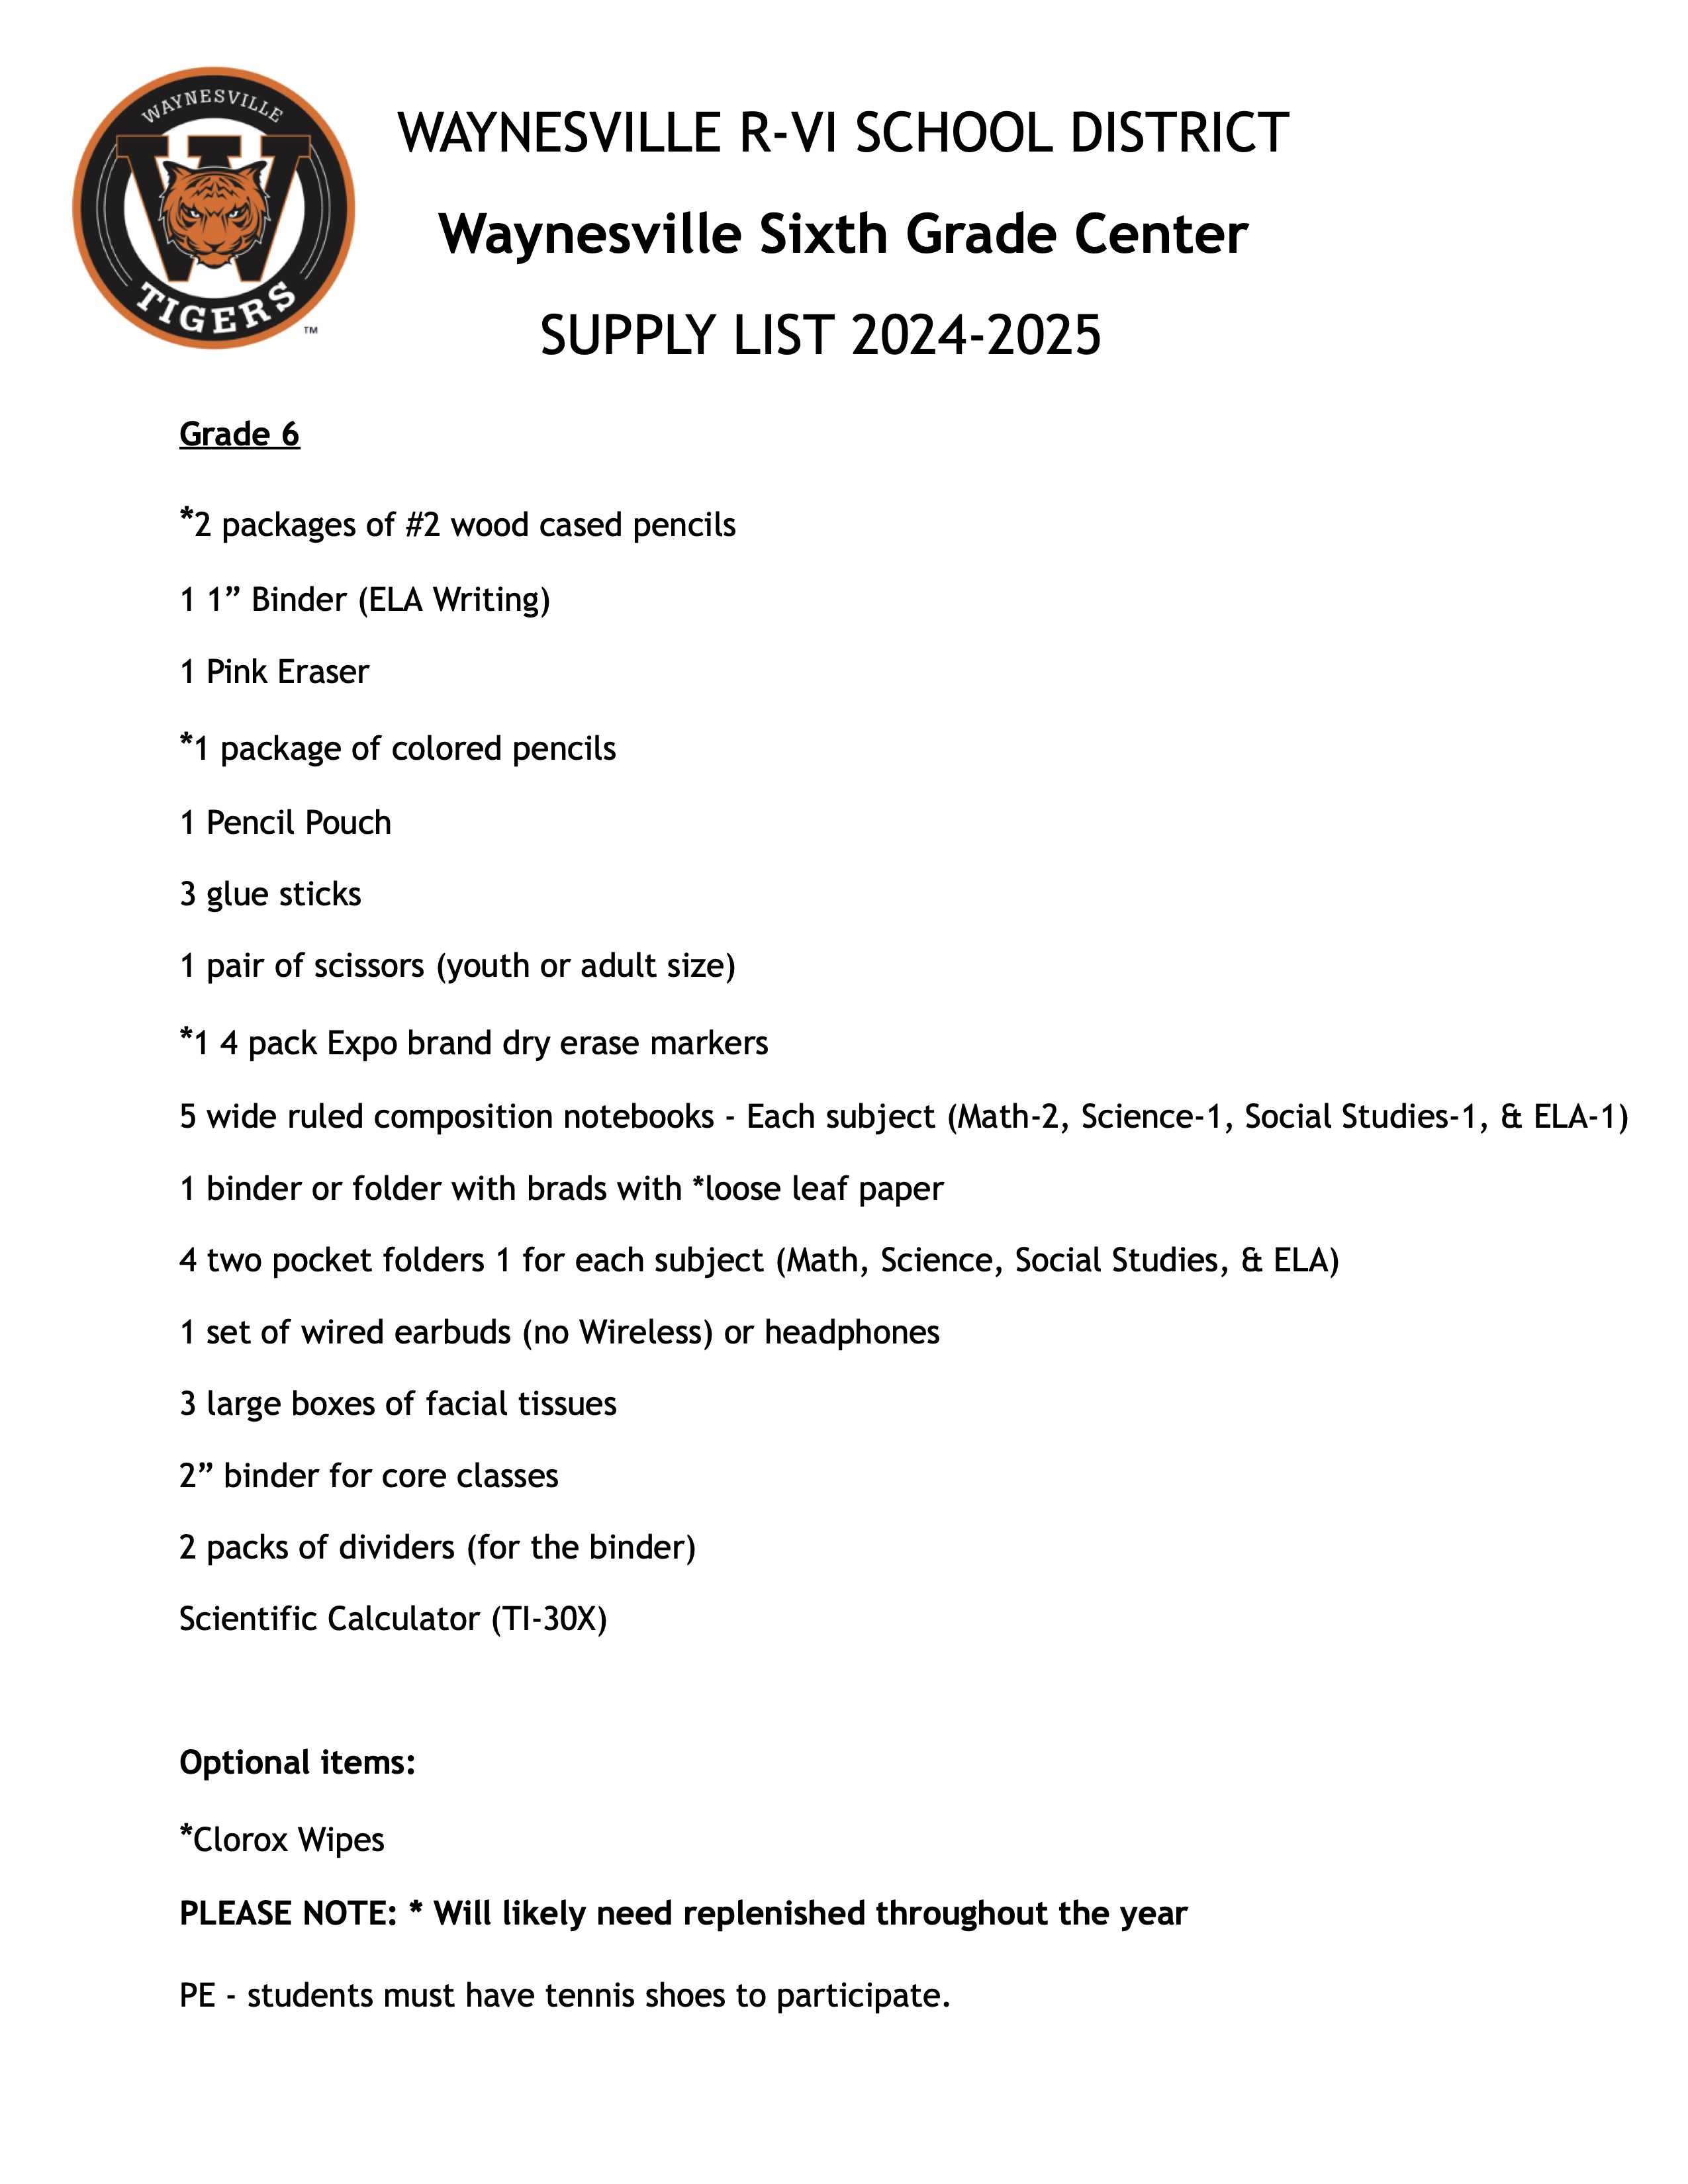 Waynesville Sixth Grade Center School Supply List